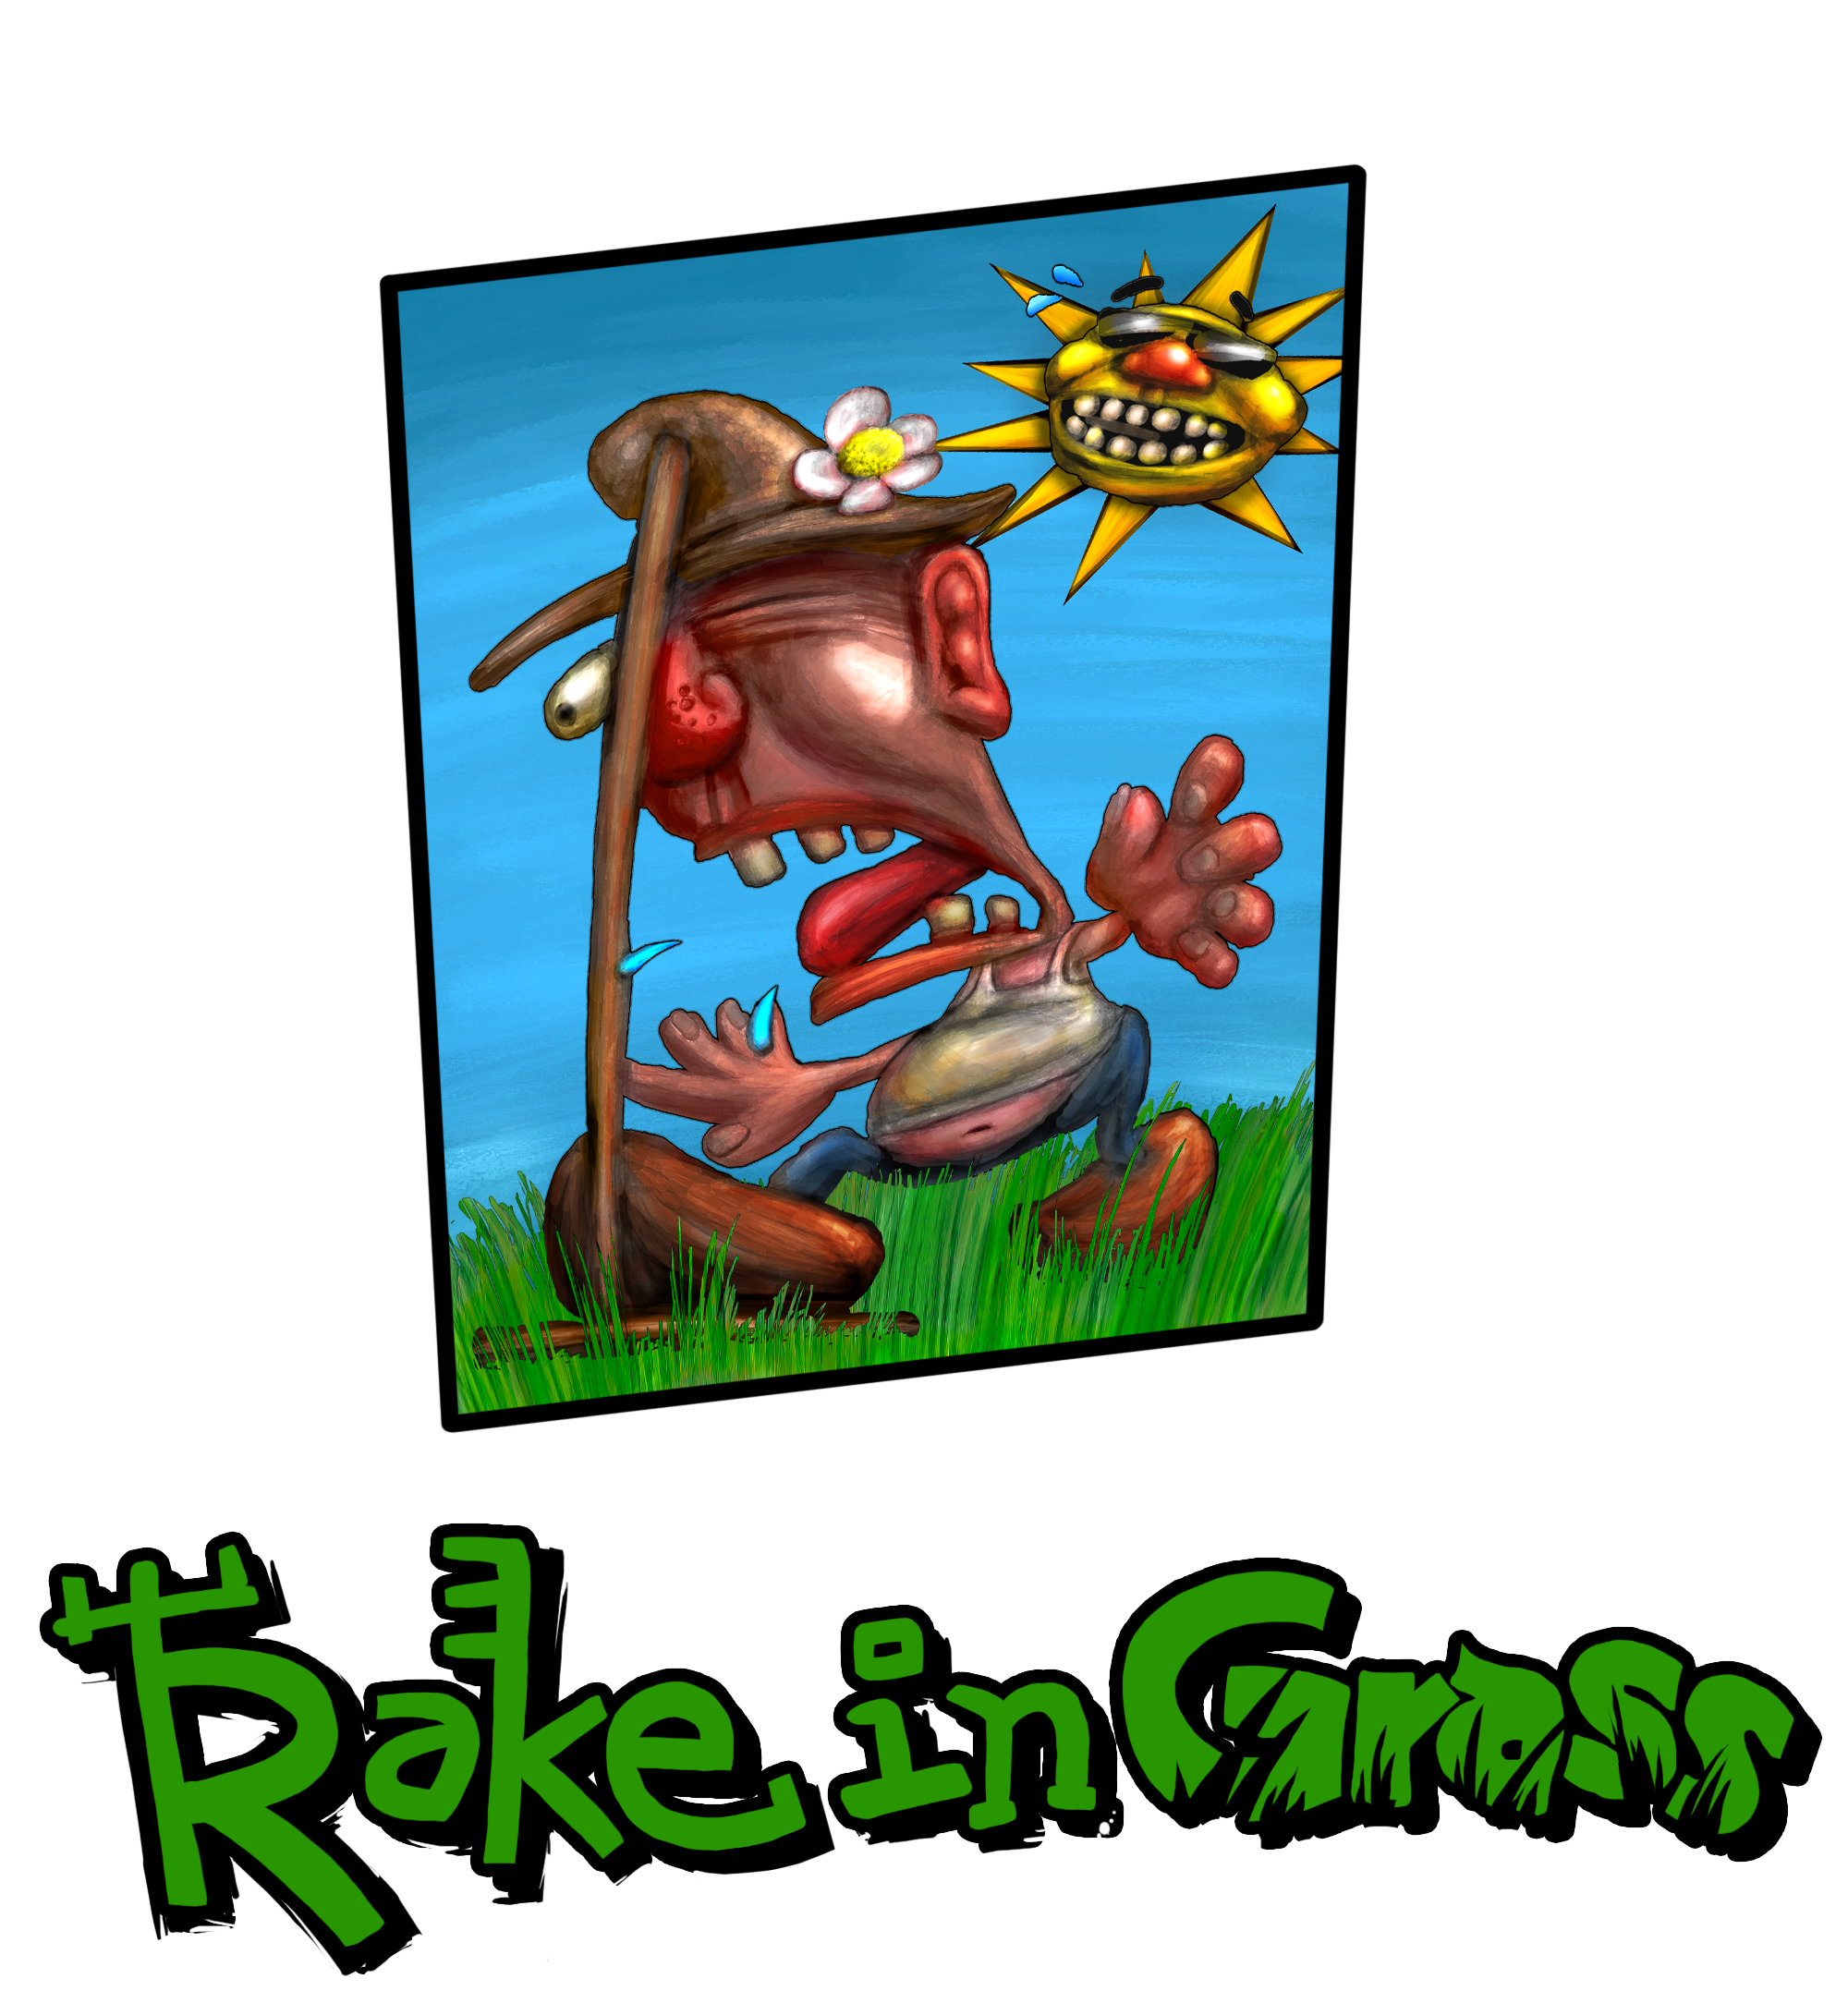 File:Rake in grass game s2.jpg - Wikipedia